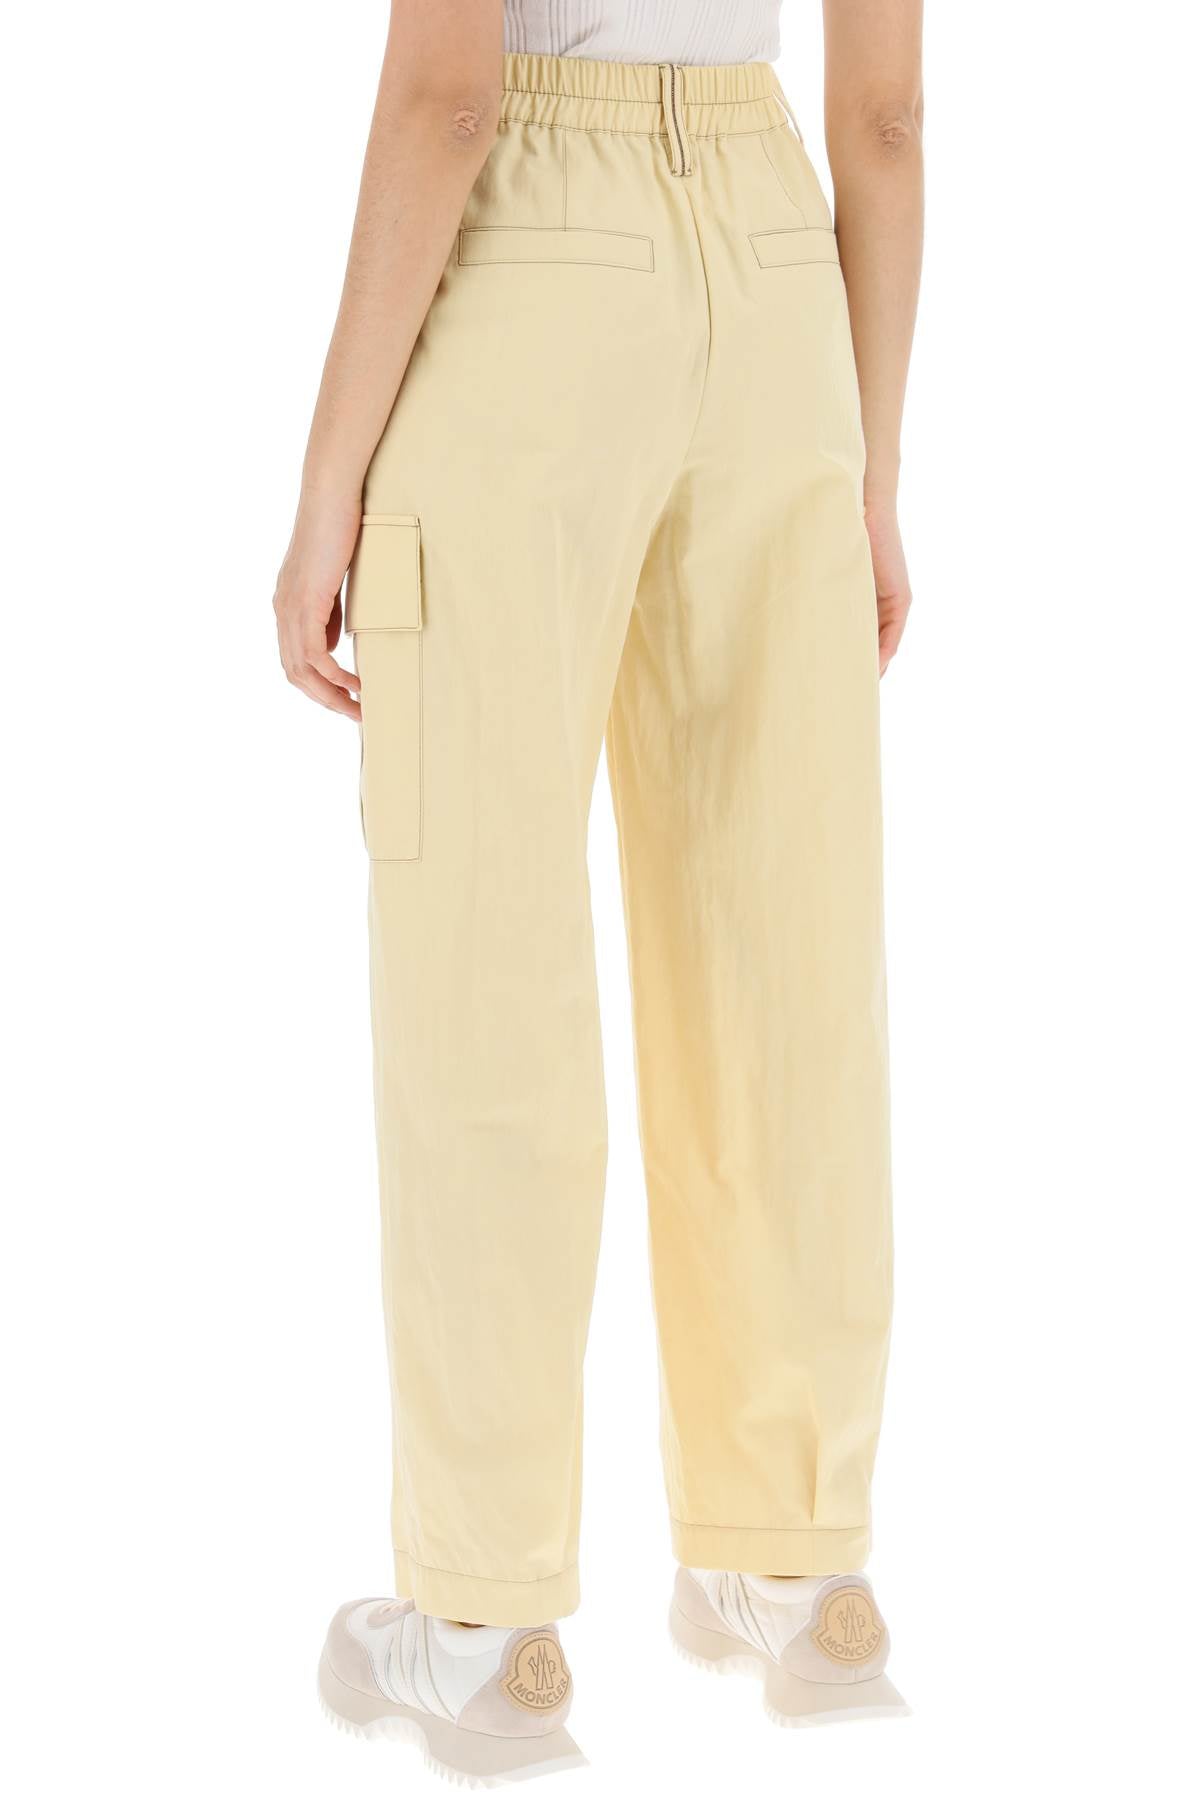 Shop Brunello Cucinelli Yellow Utility Pants For Women